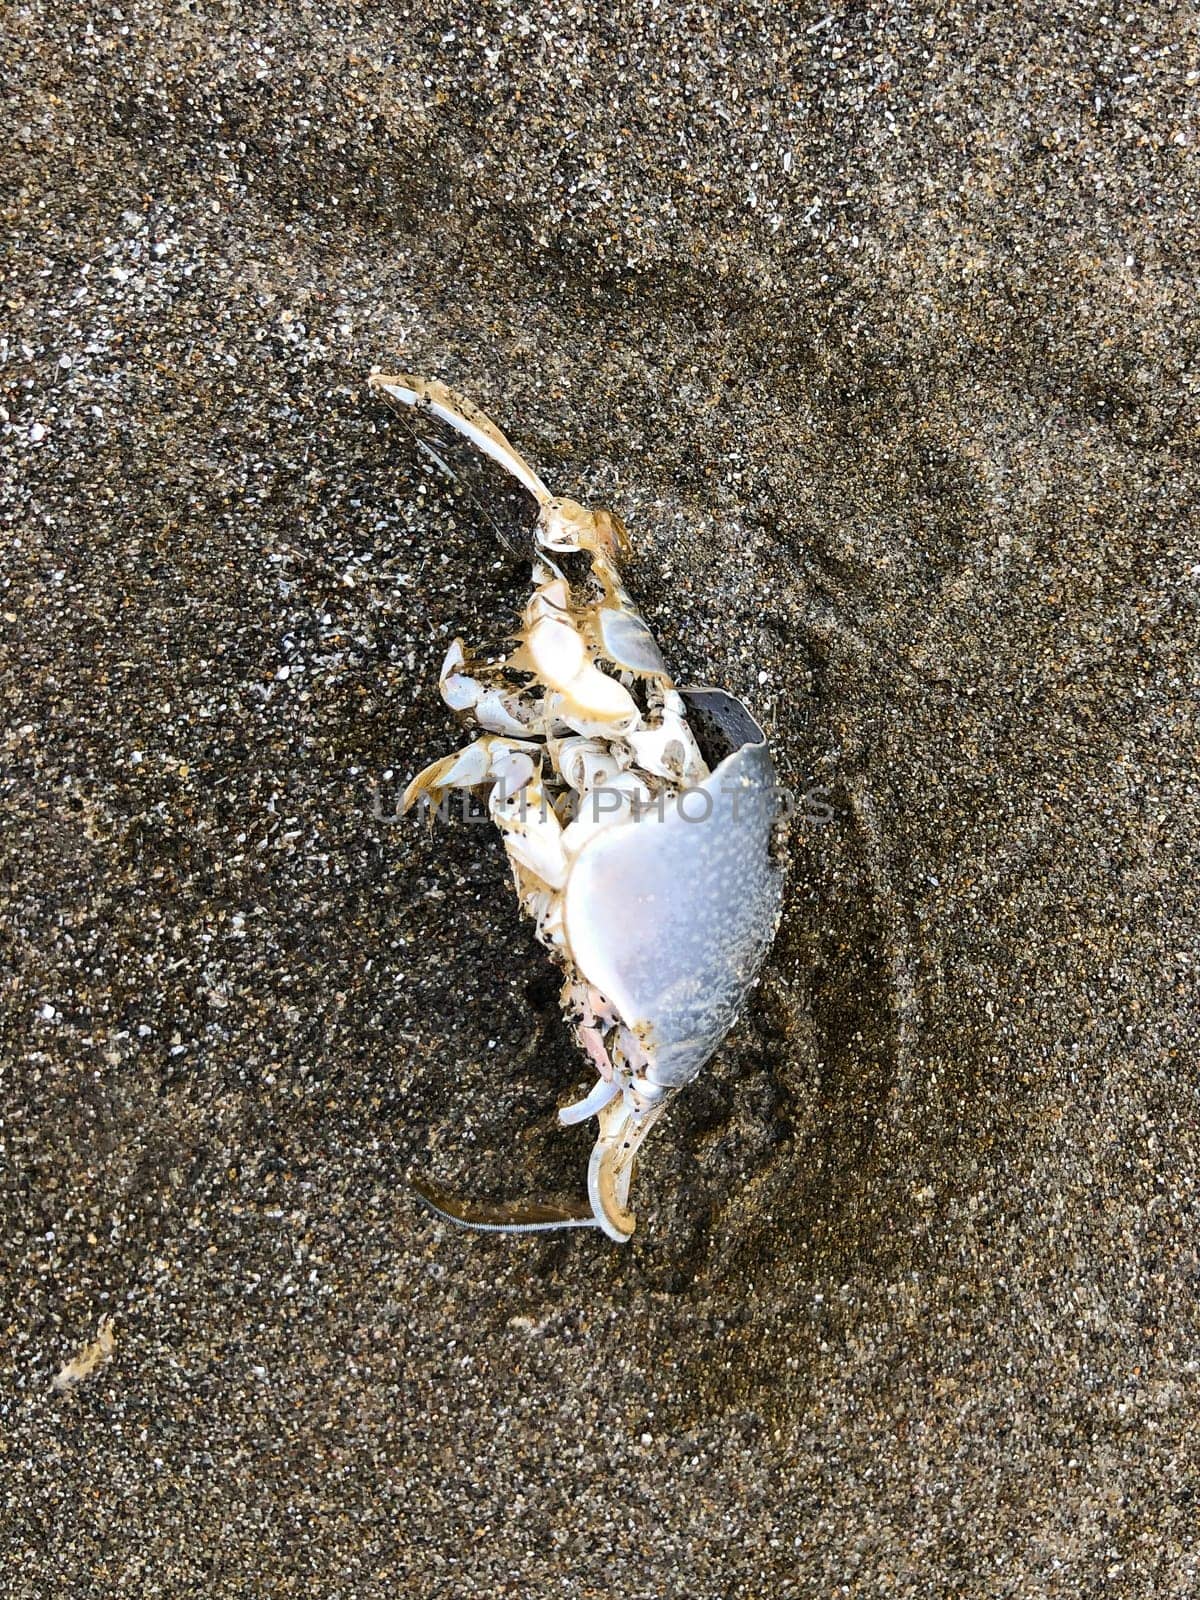 Dead Mole Crab on Oregon Coast by joshuaraineyphotography